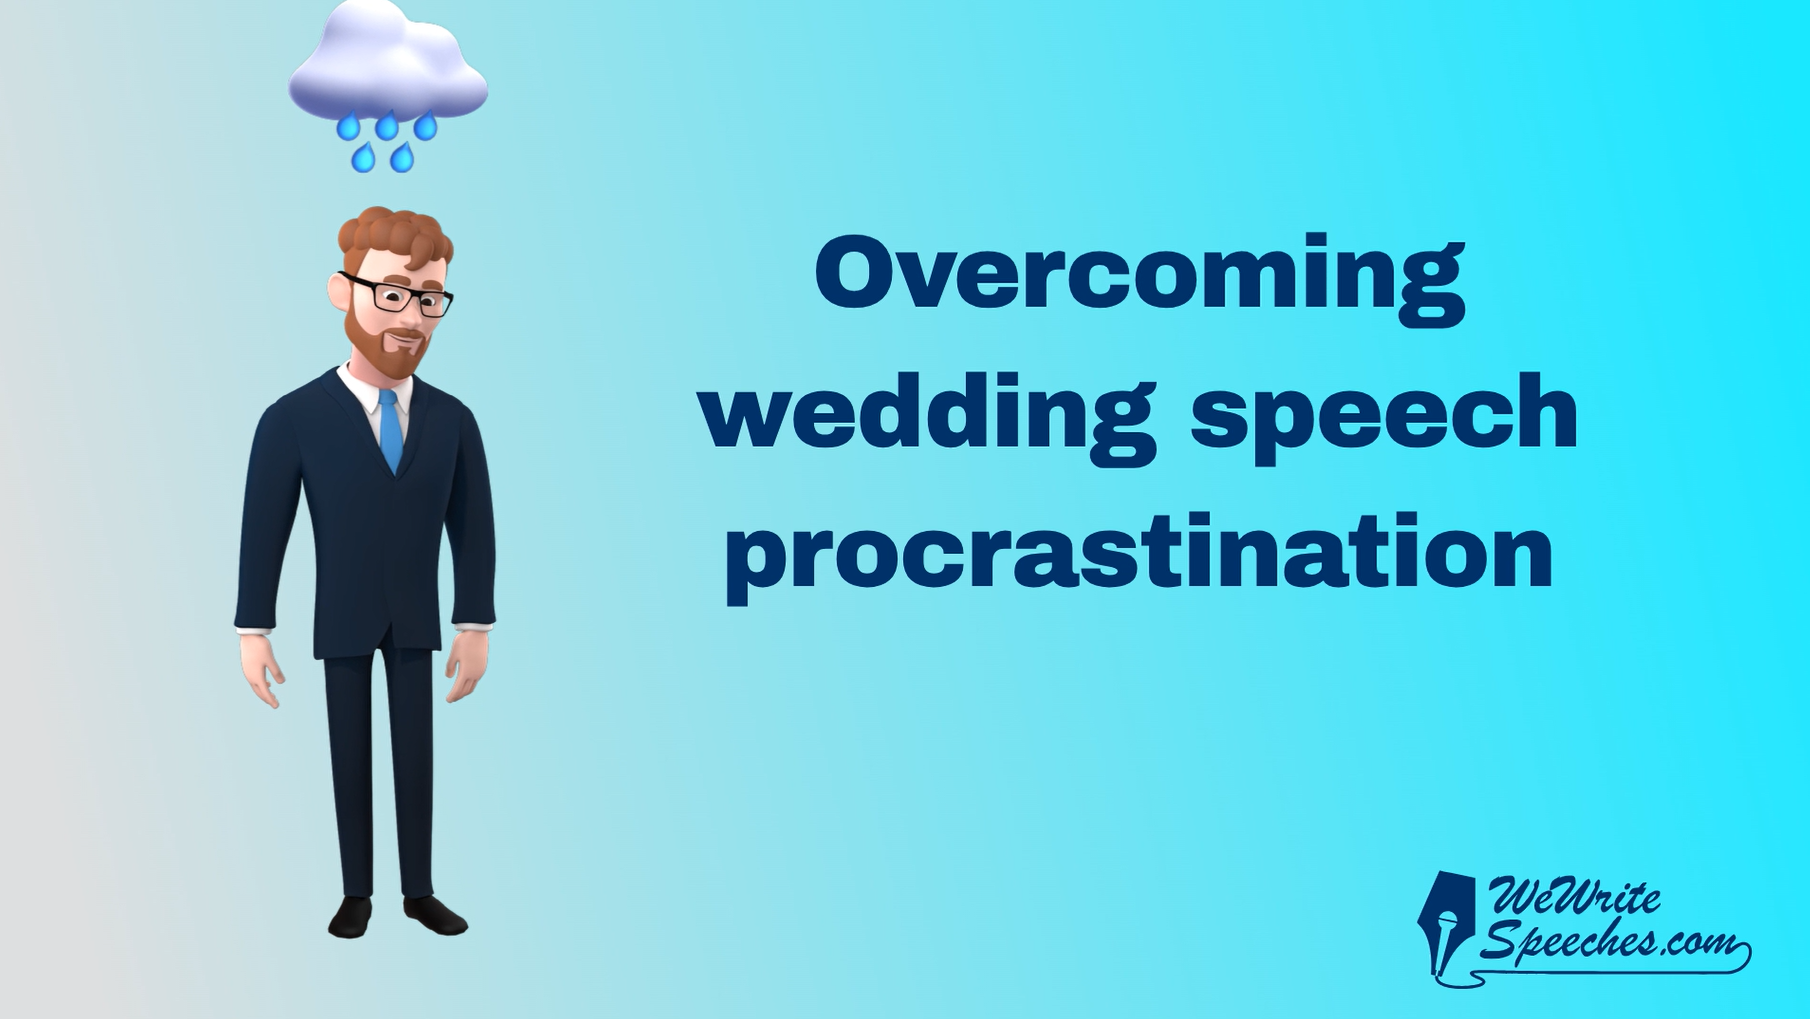 Load video: Overcoming wedding speech procrastination